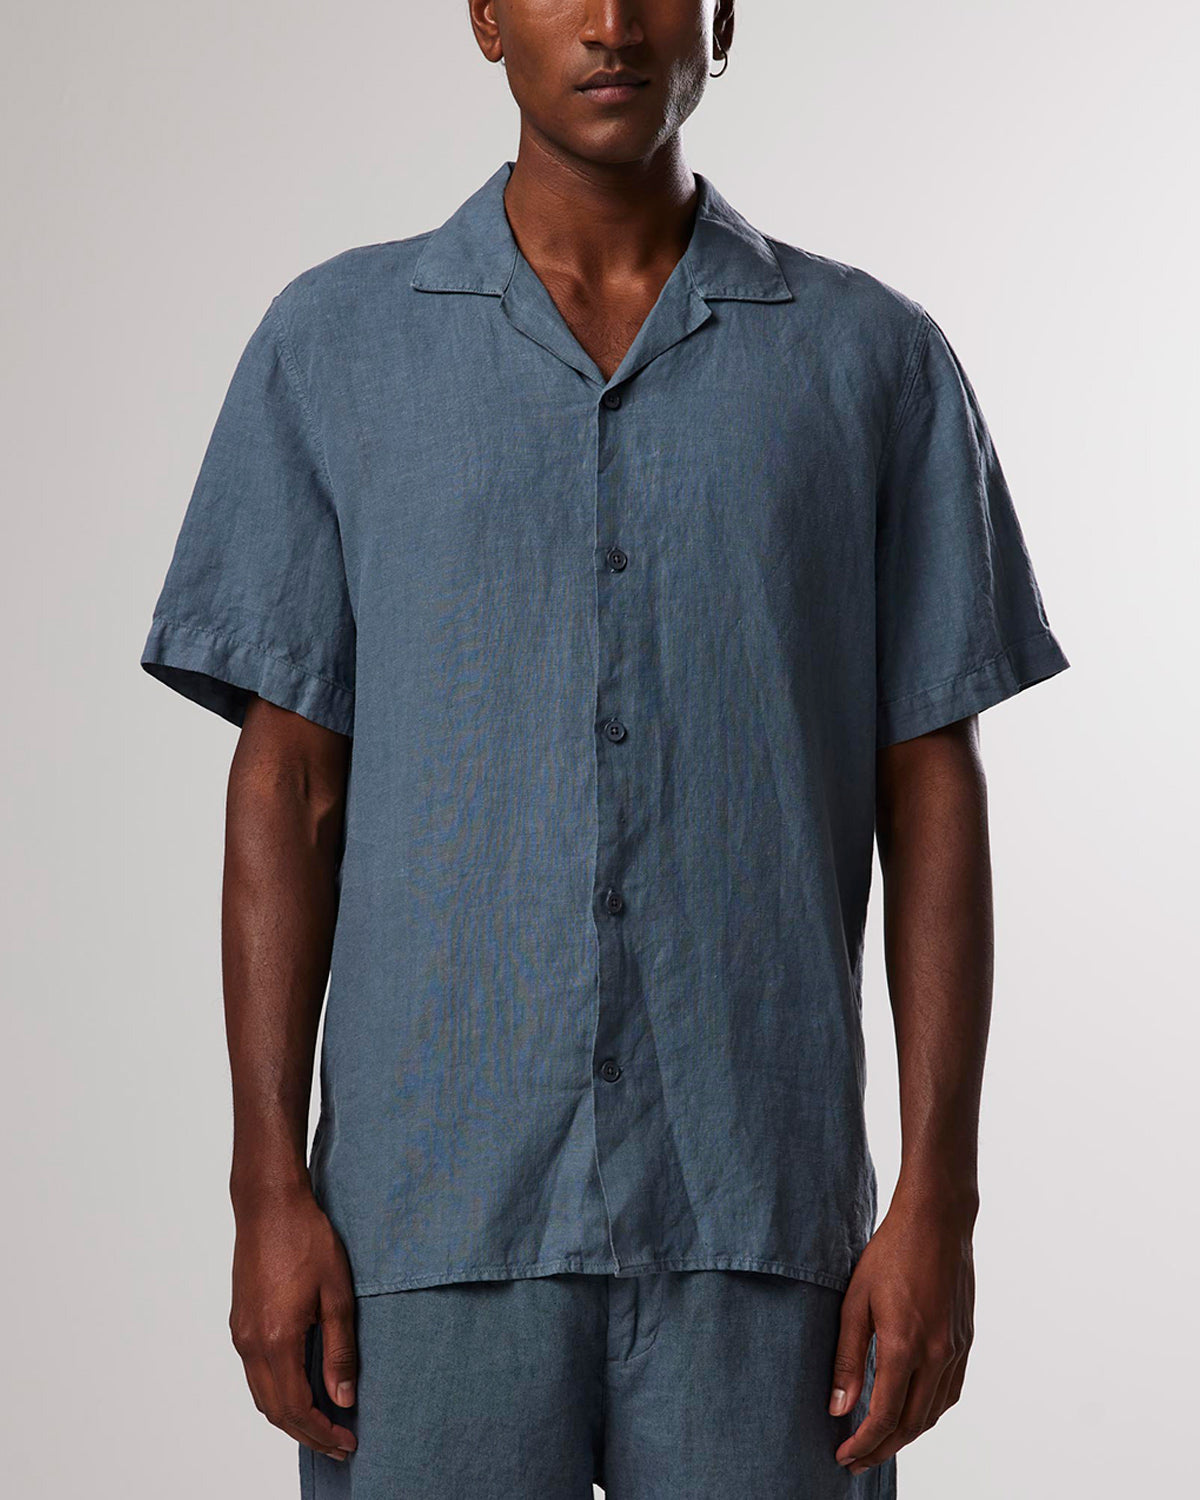 No Nationality Miyagi Linen Short Sleeve Shirt - Dusty Blue